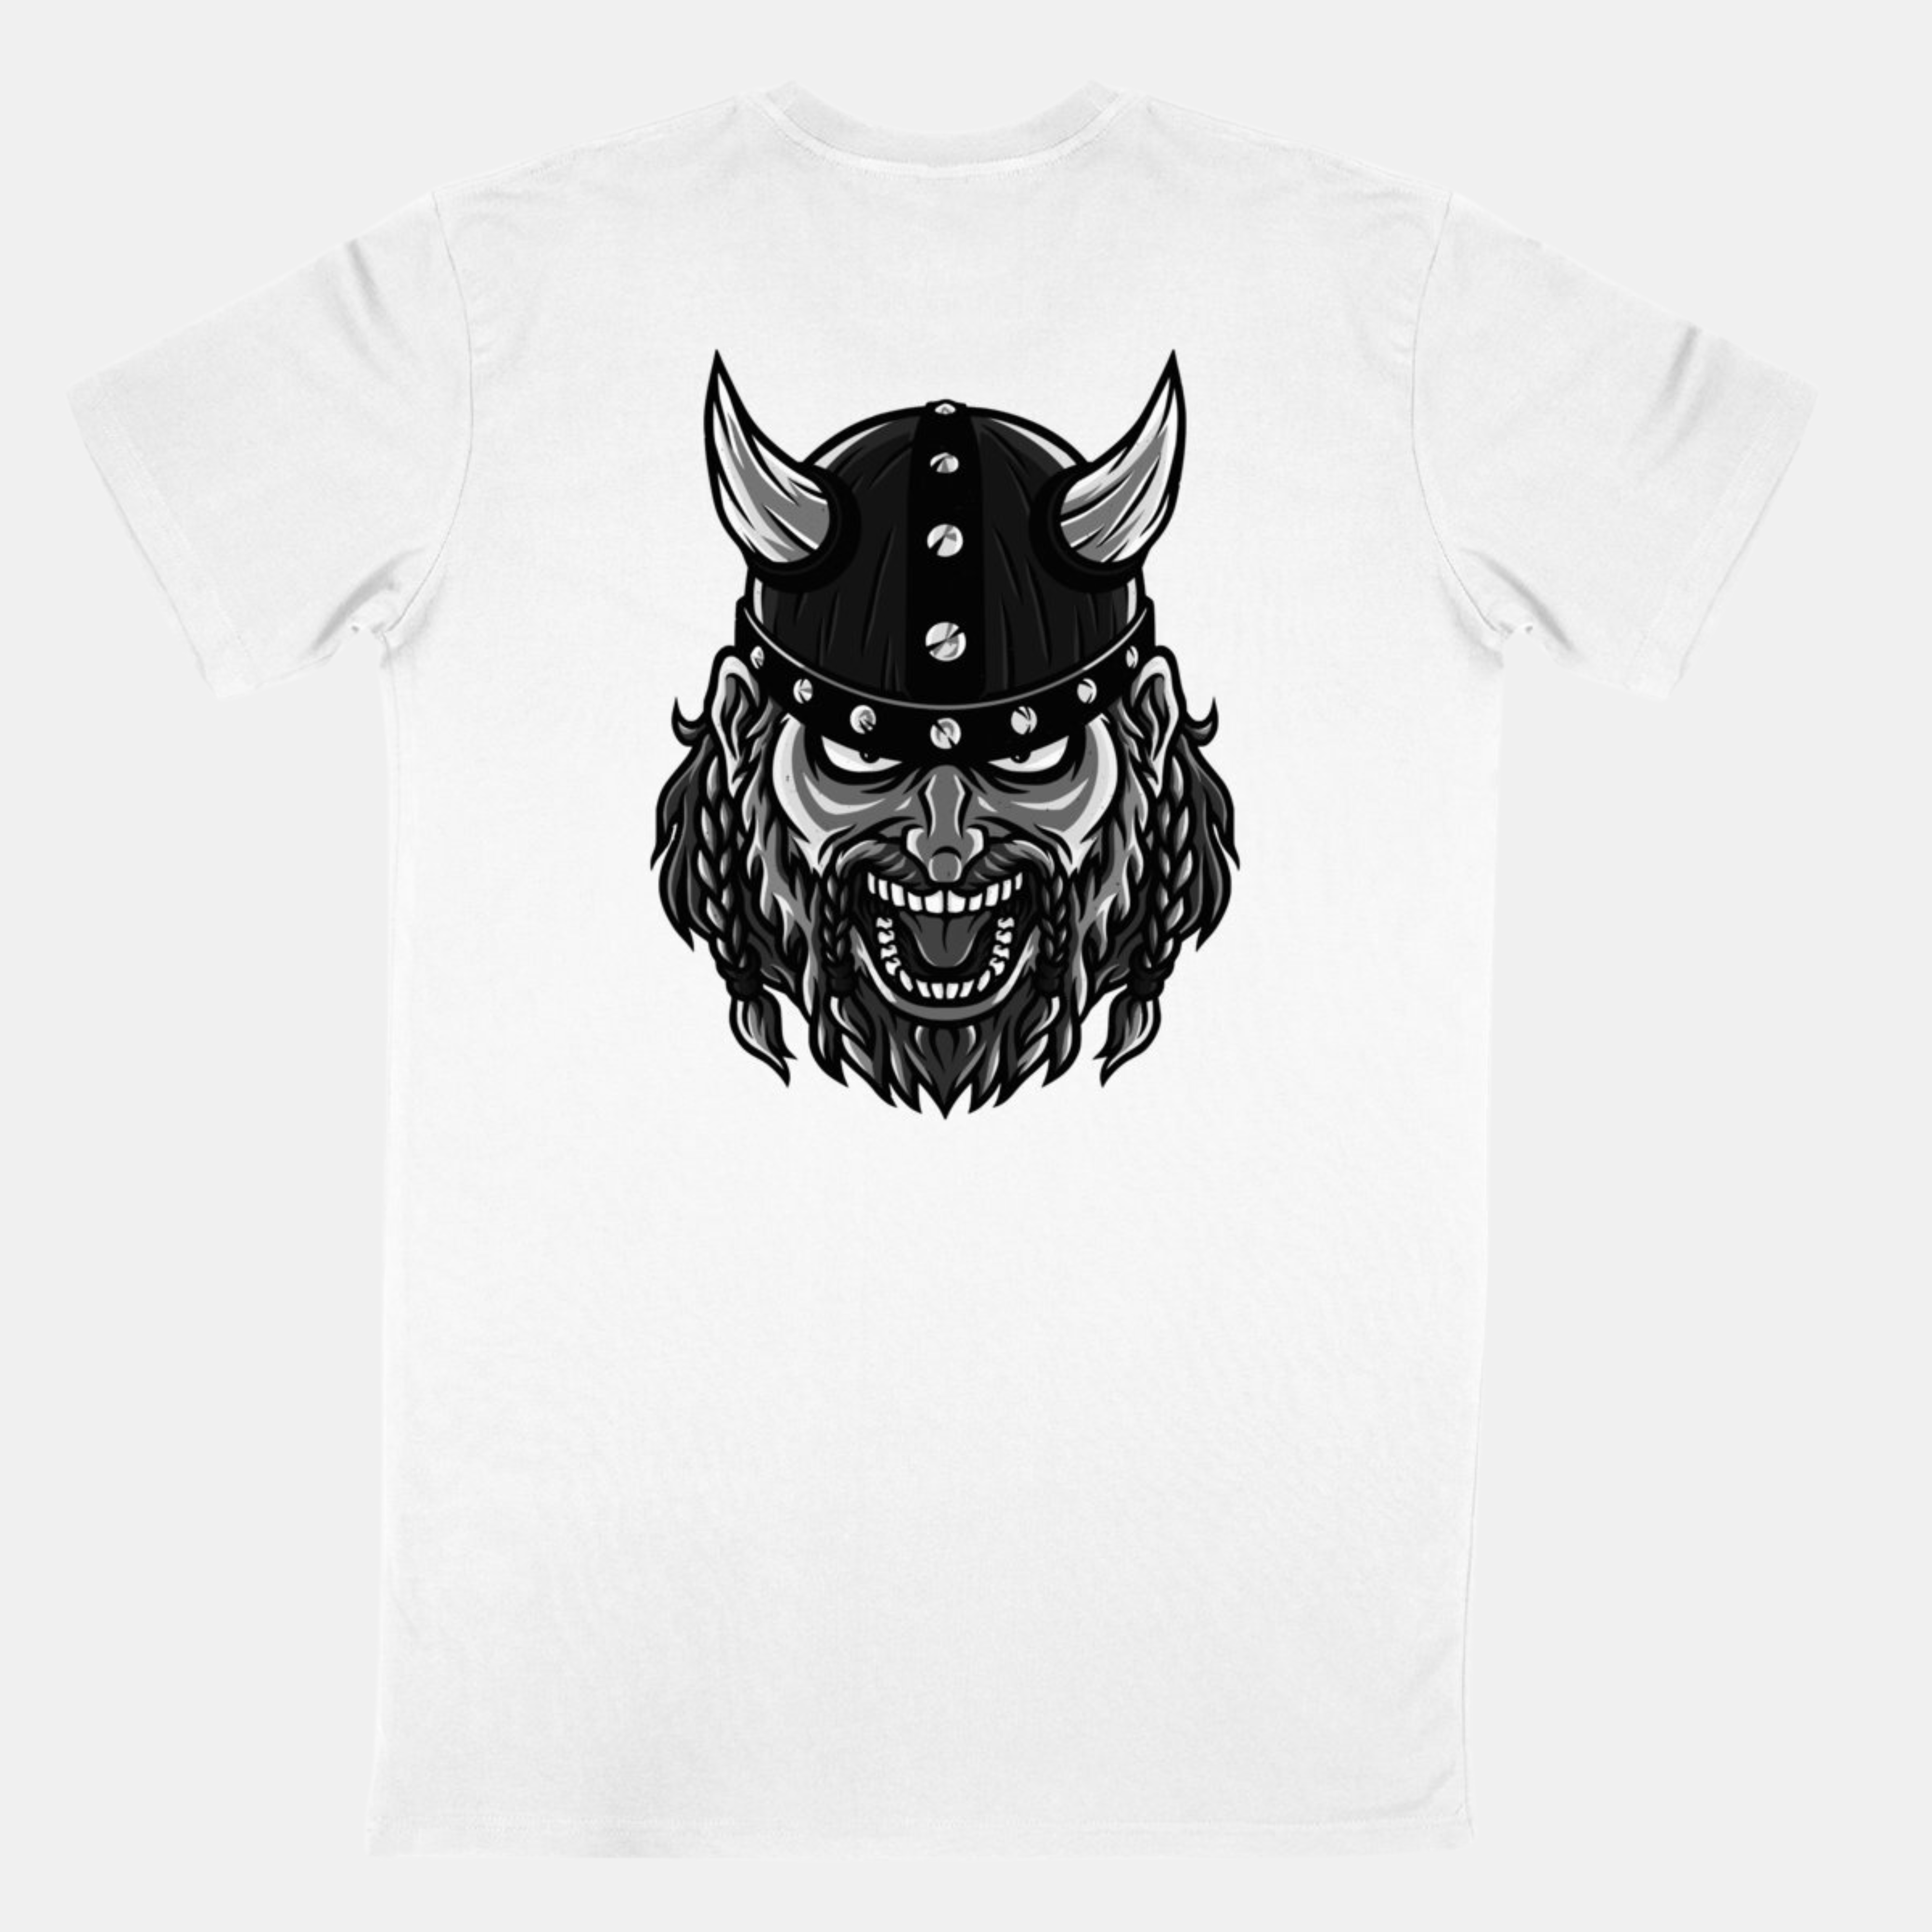 T-Shirt unisexe logo Ragnarök noir